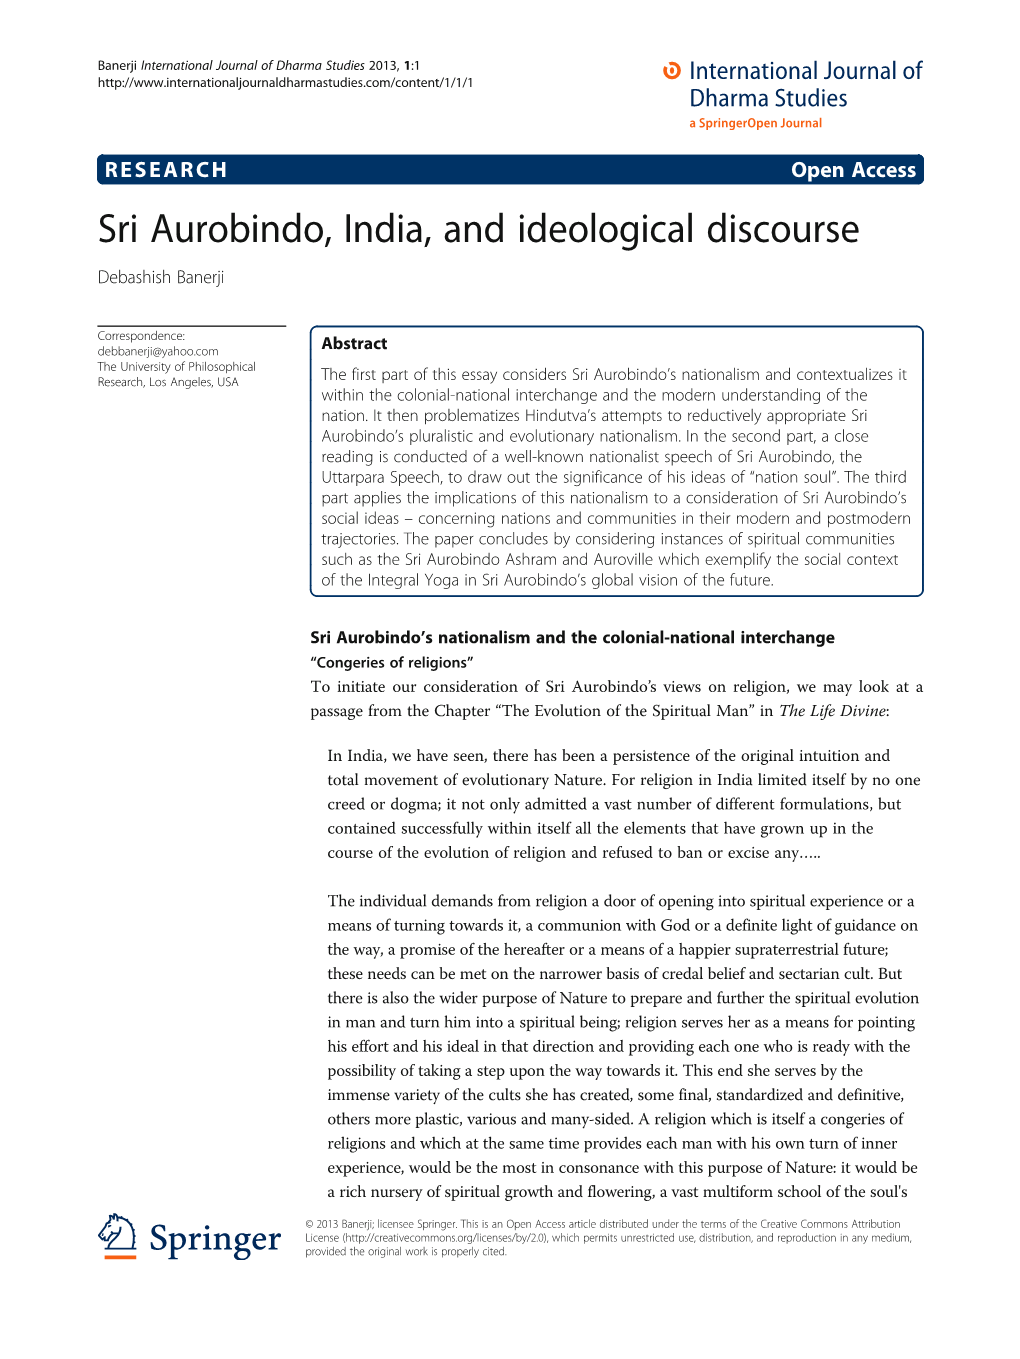 Sri Aurobindo, India, and Ideological Discourse Debashish Banerji